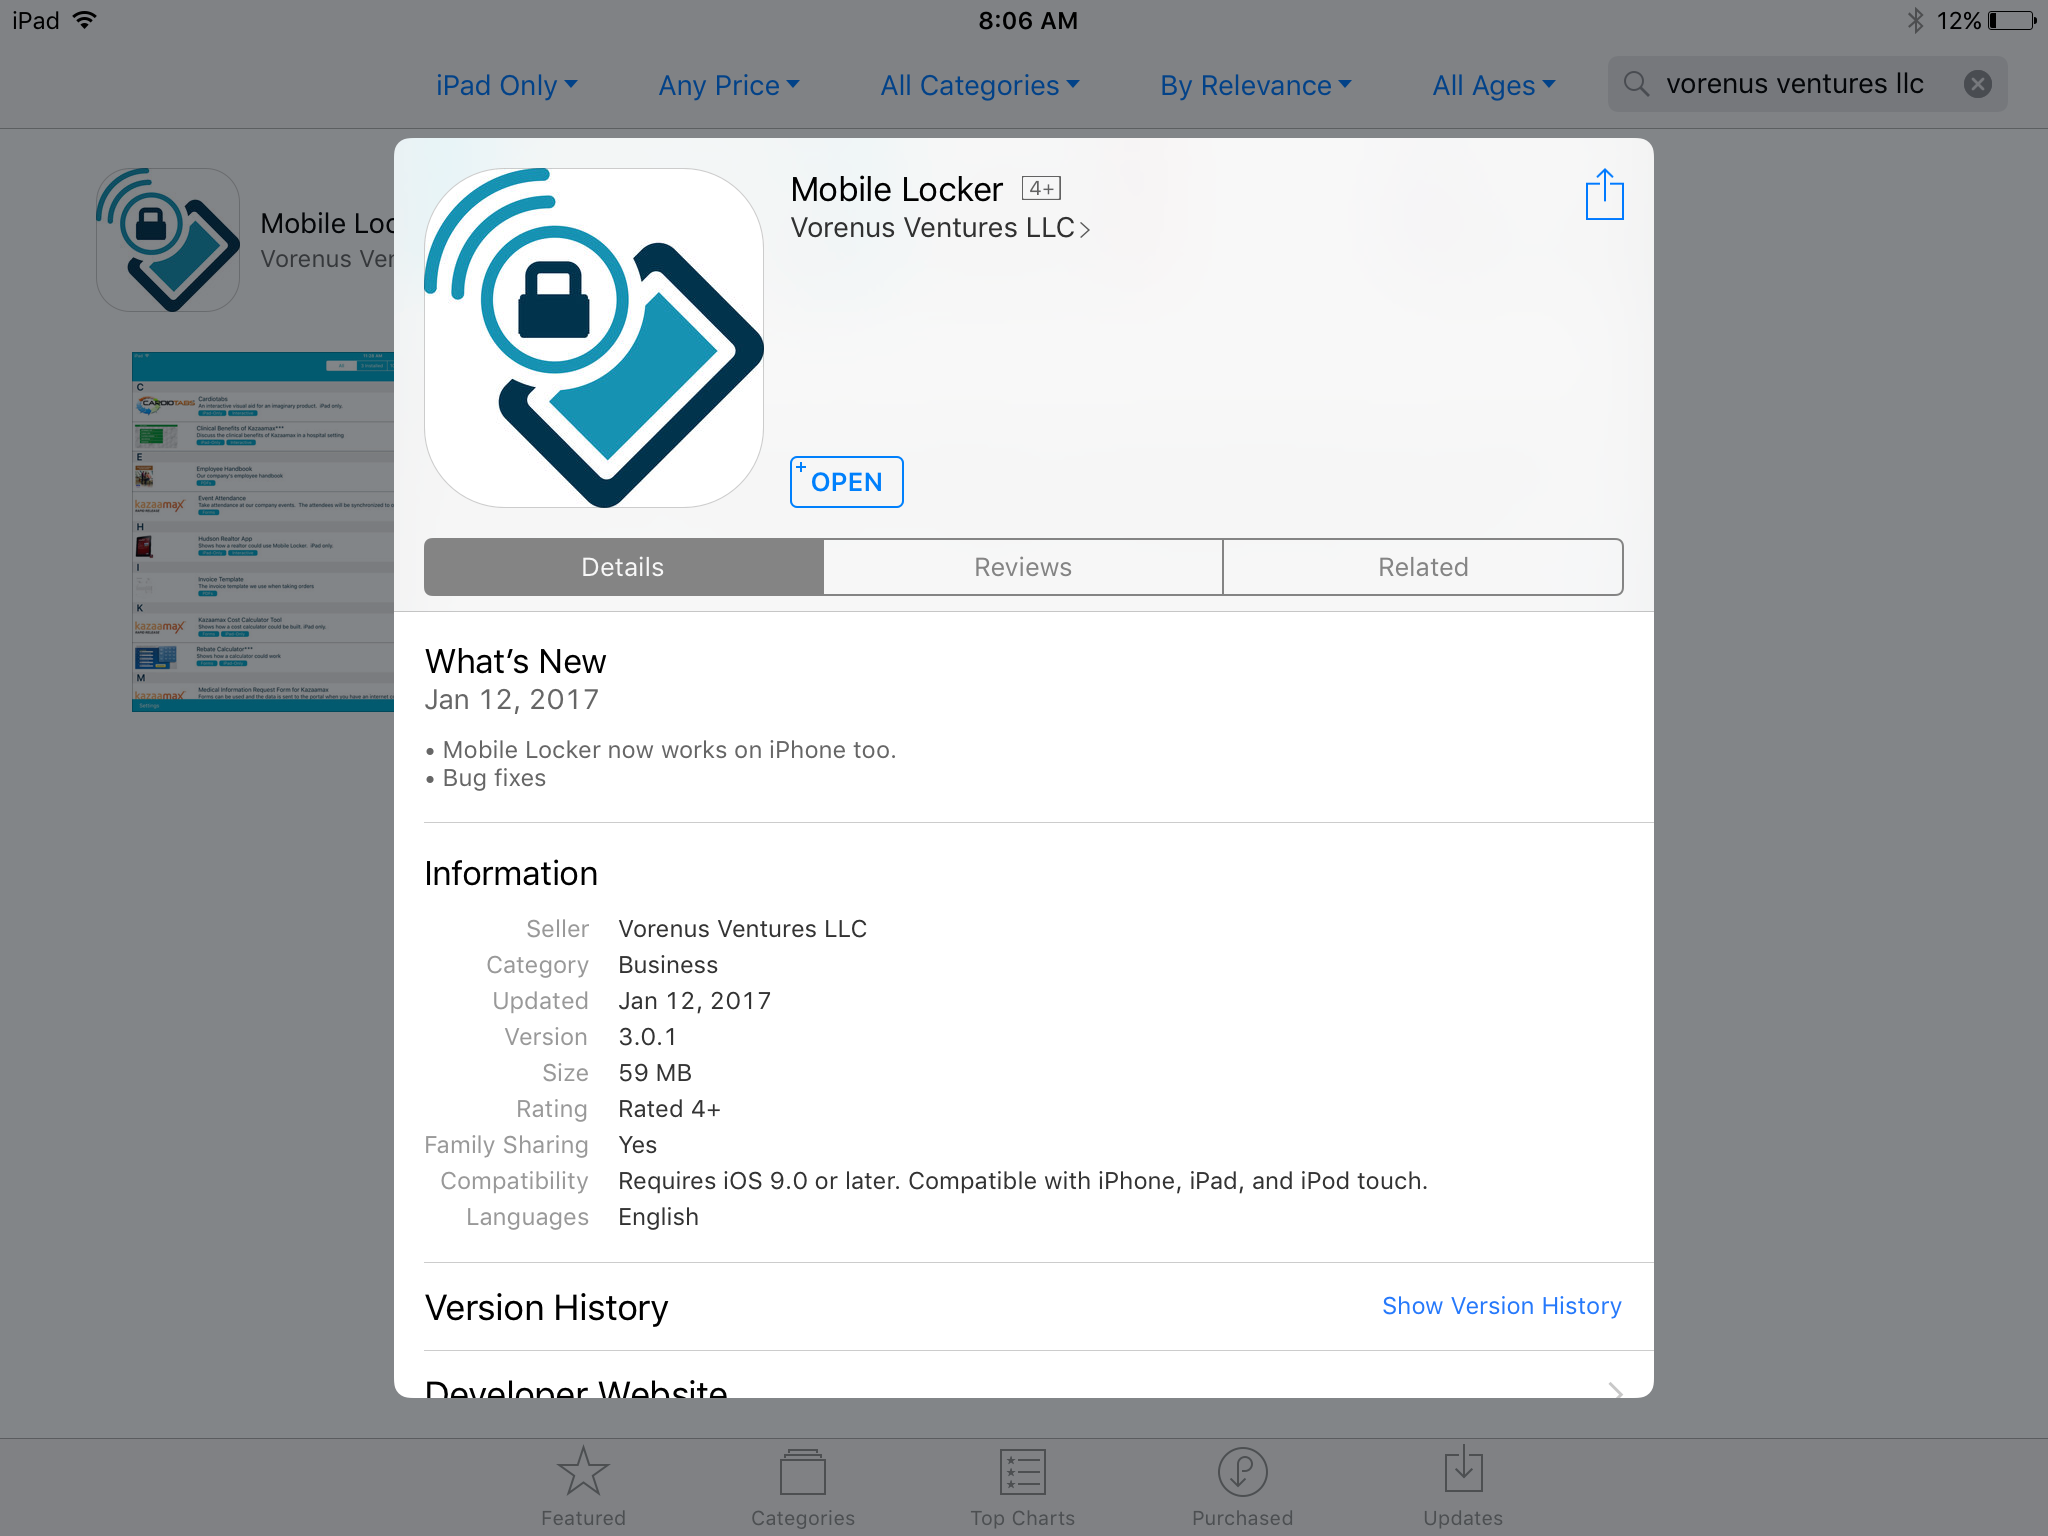 Mobile Locker 3.0.1 in the App Store.